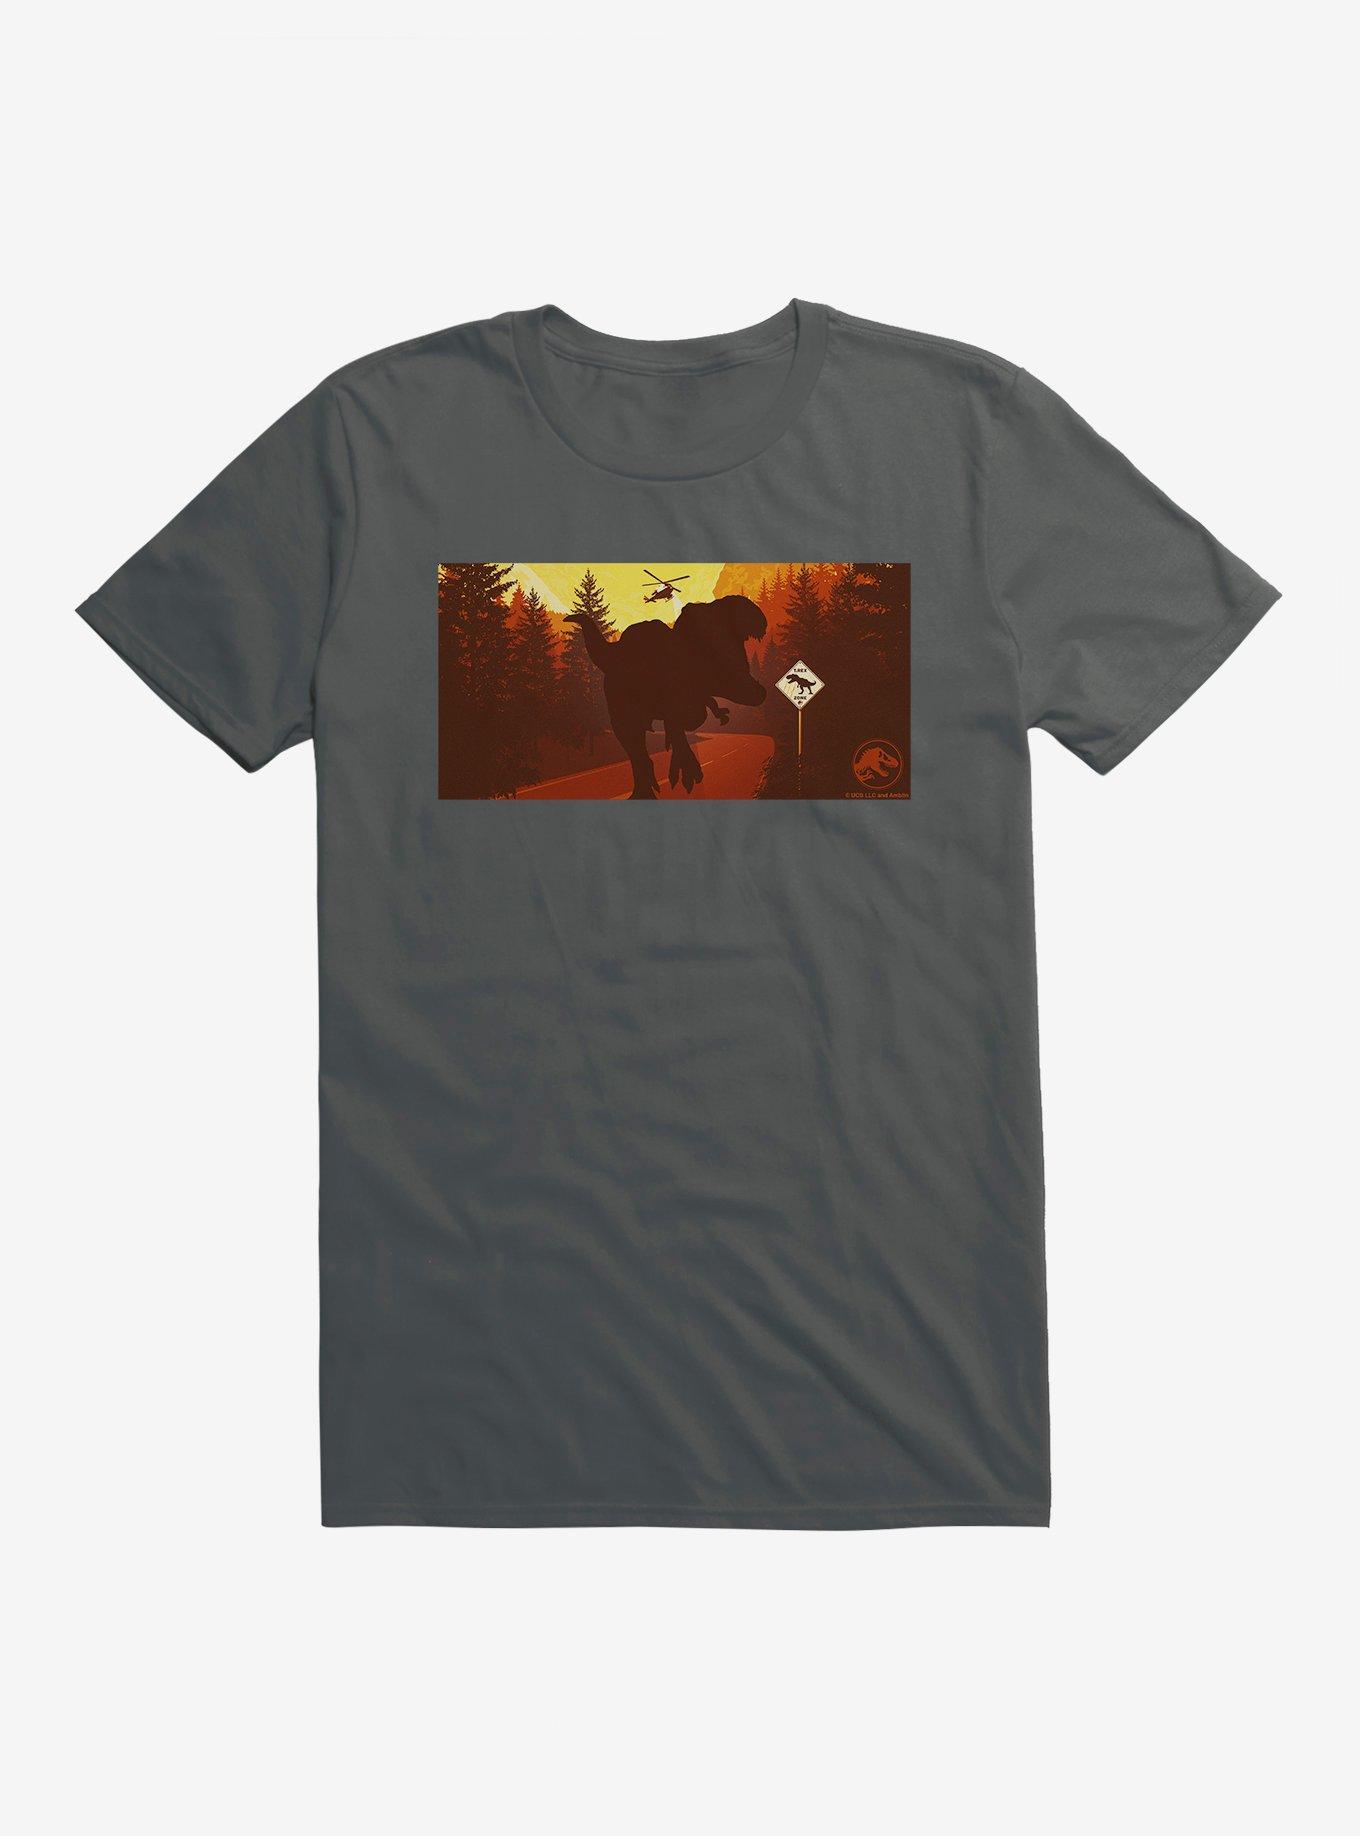 Jurassic World Dominion T-Rex Zone T-Shirt